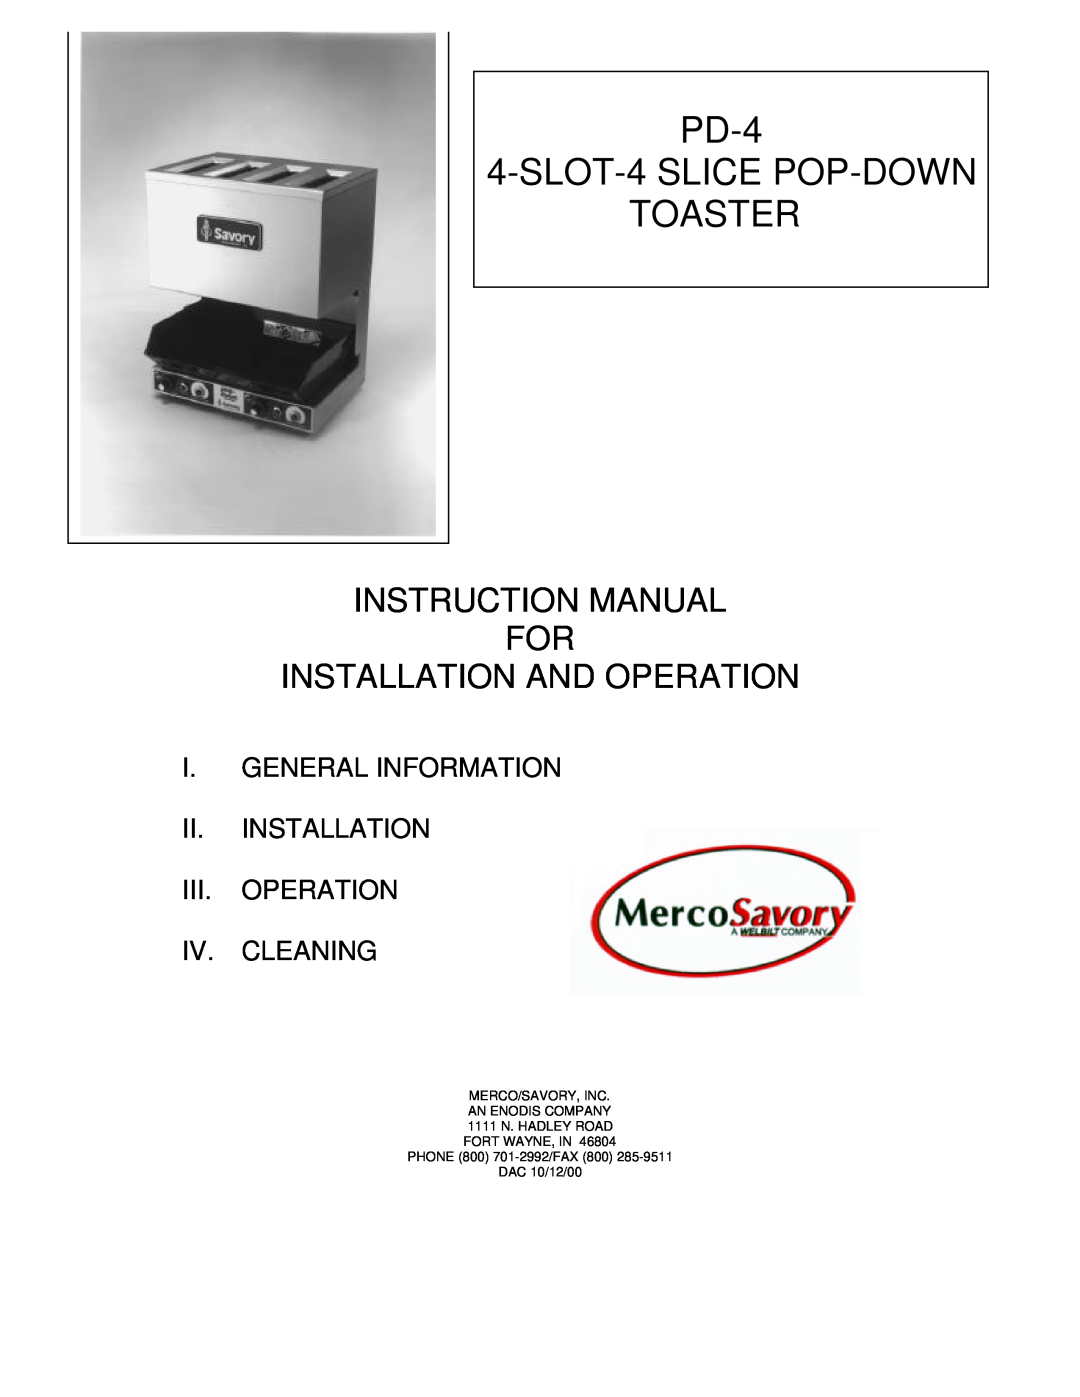 Merco Savory PD-4 instruction manual SLOT-4SLICE POP-DOWNTOASTER, I.General Information Ii.Installation 